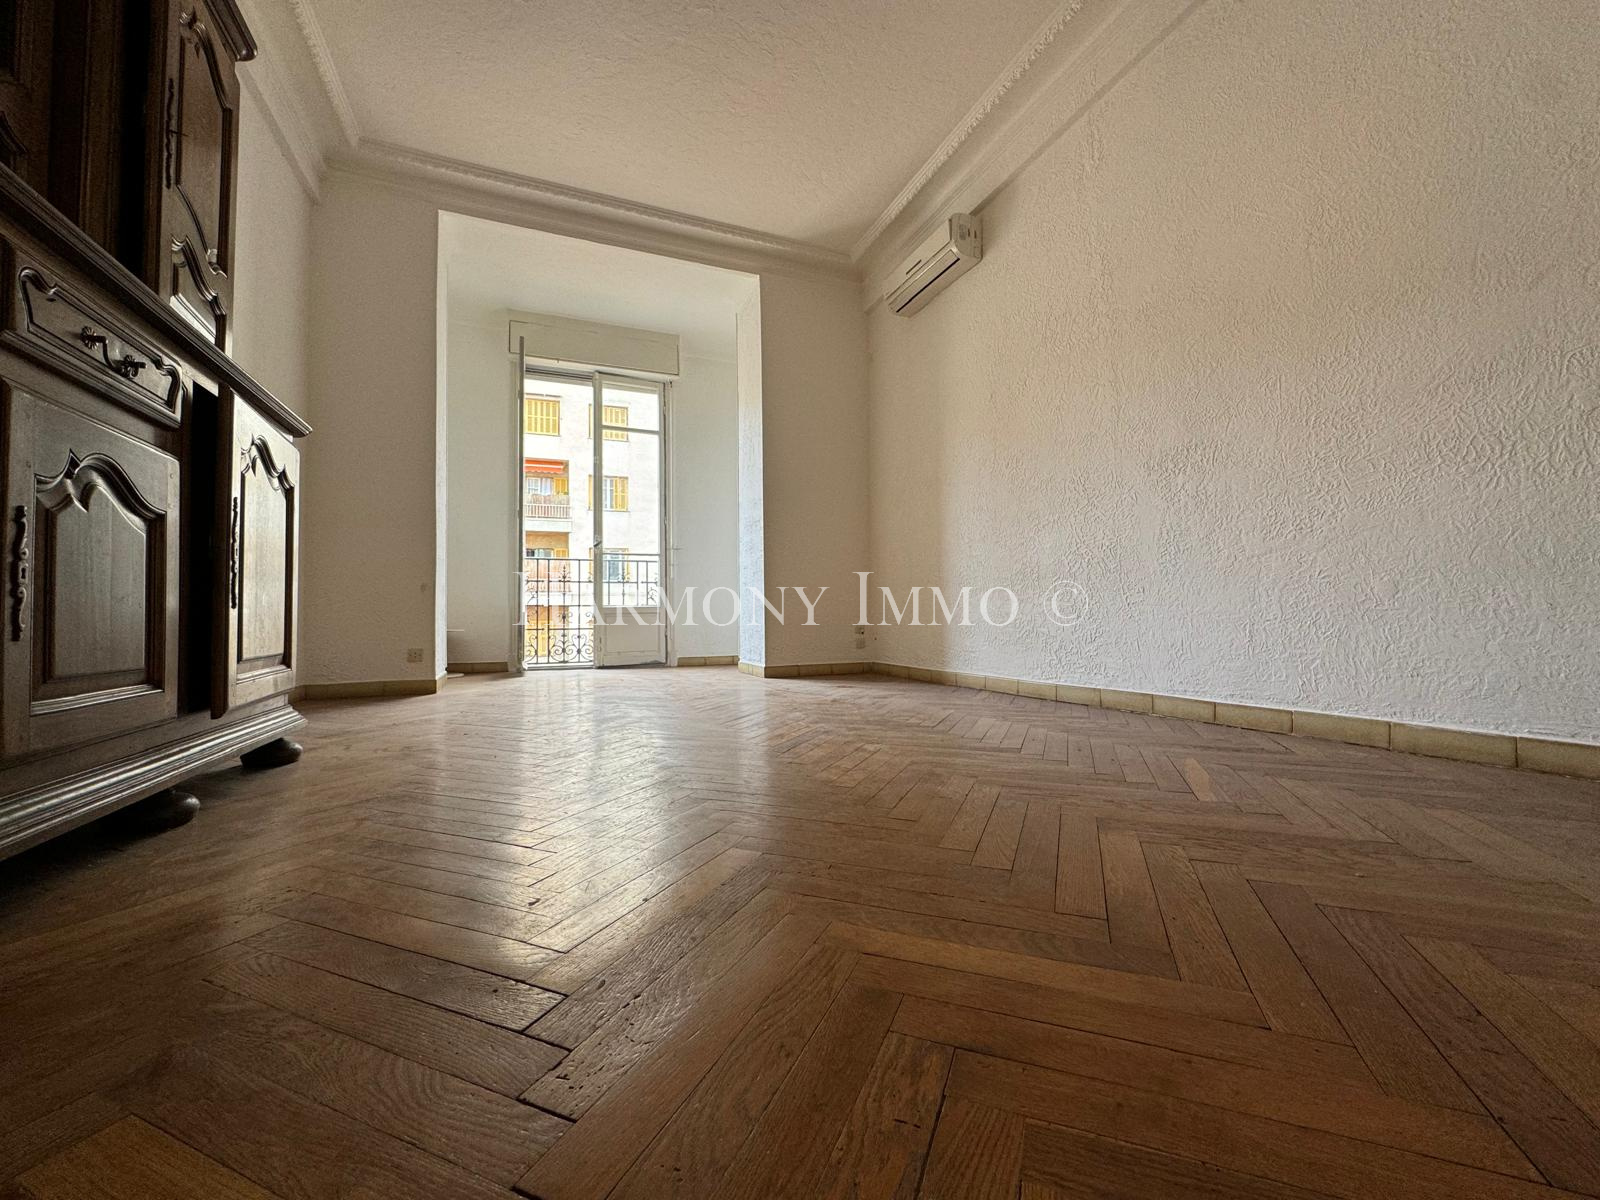 Vente Appartement 76m² 3 Pièces à Nice (06300) - Harmony Immo